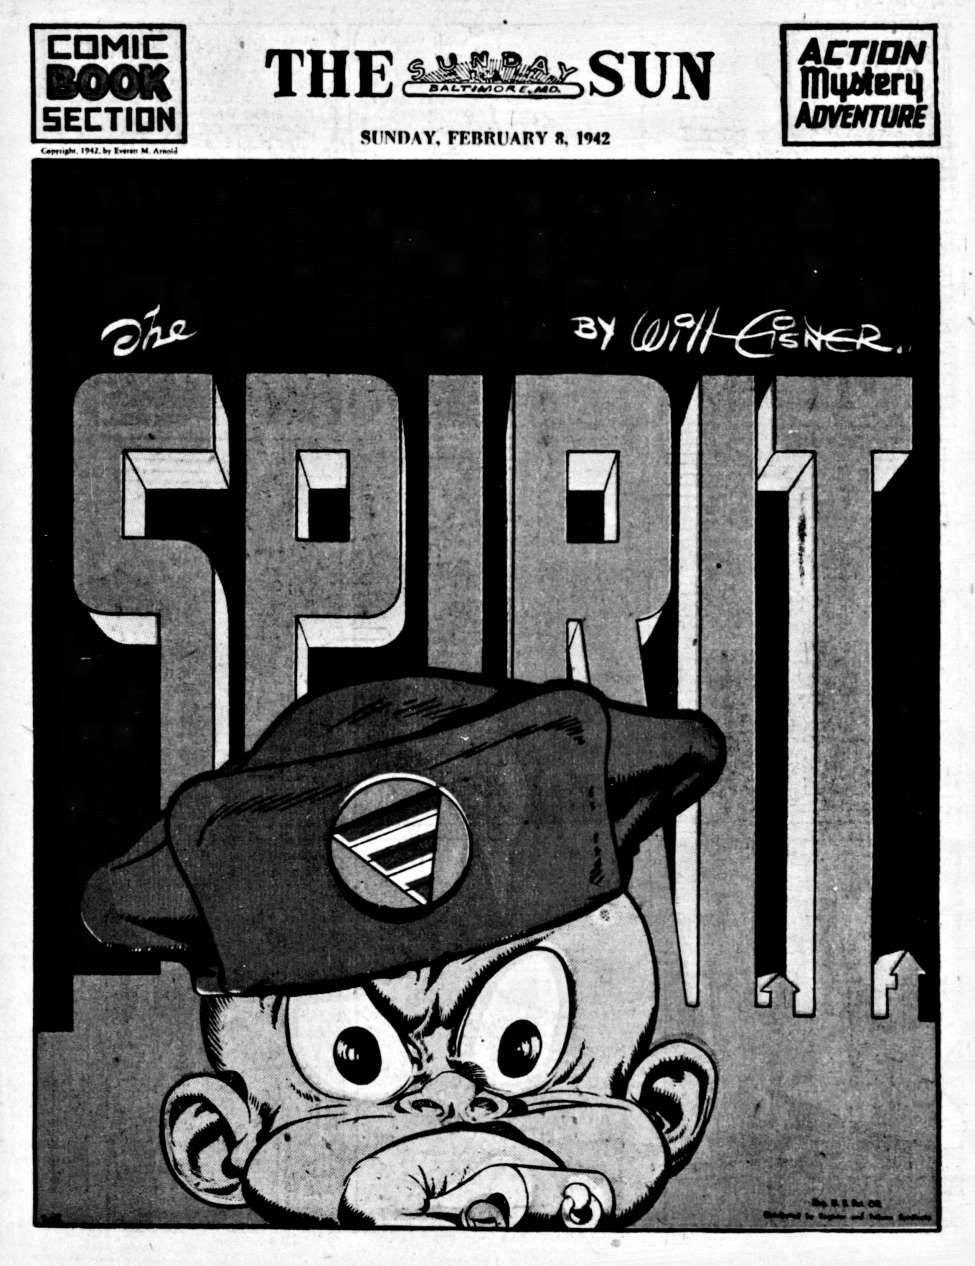 Book Cover For The Spirit (1942-02-08) - Baltimore Sun (b/w)